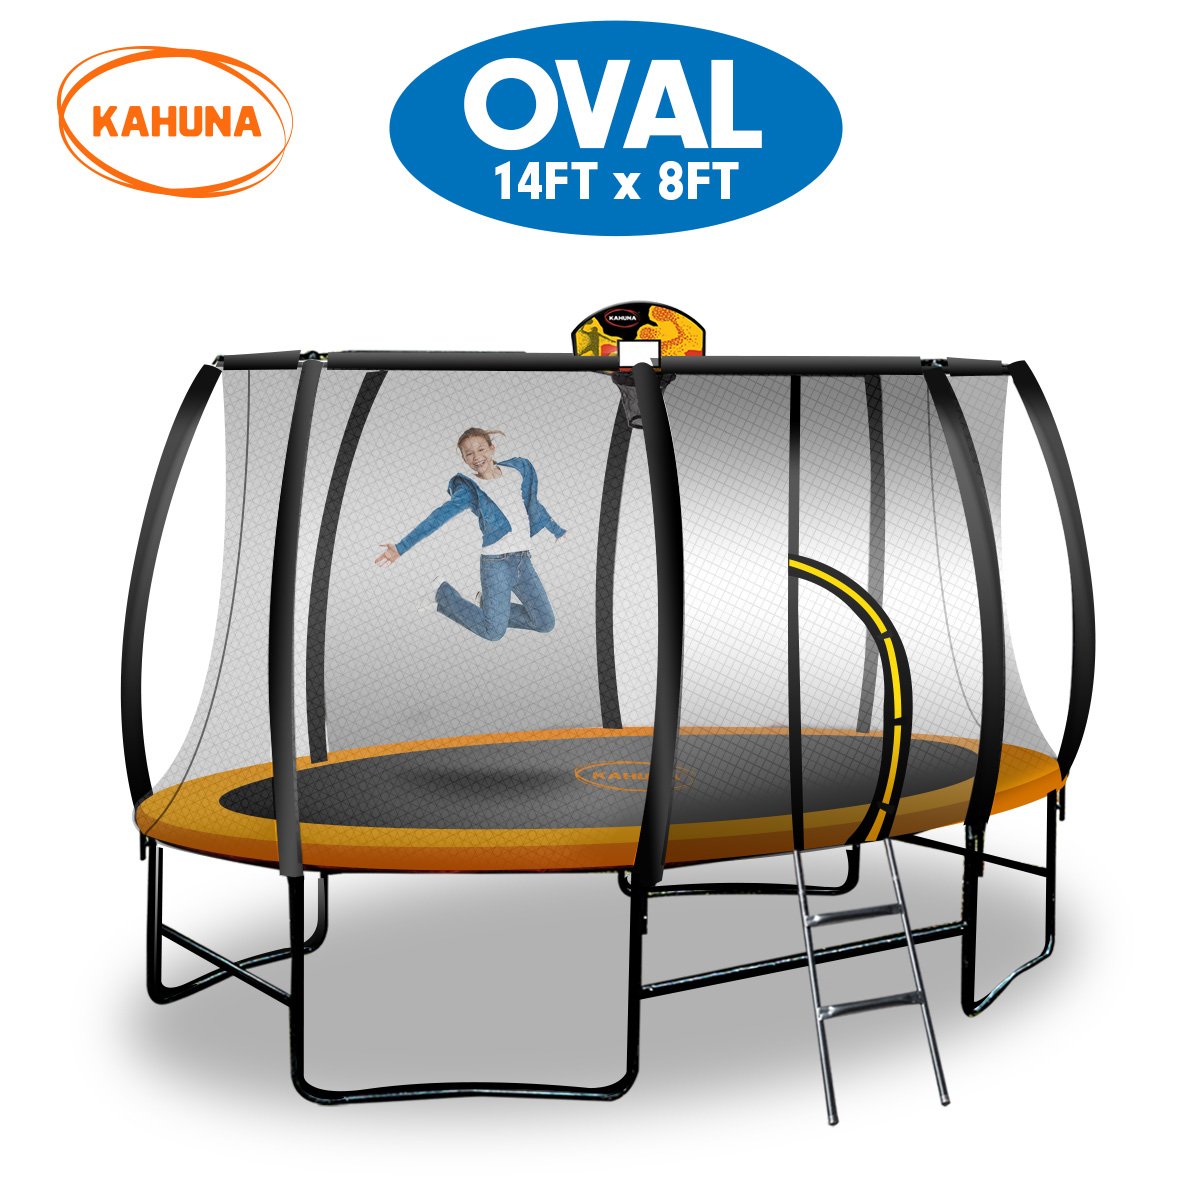 Kahuna Trampoline 8 ft x 14ft Oval with Basketball Set - Orange 1